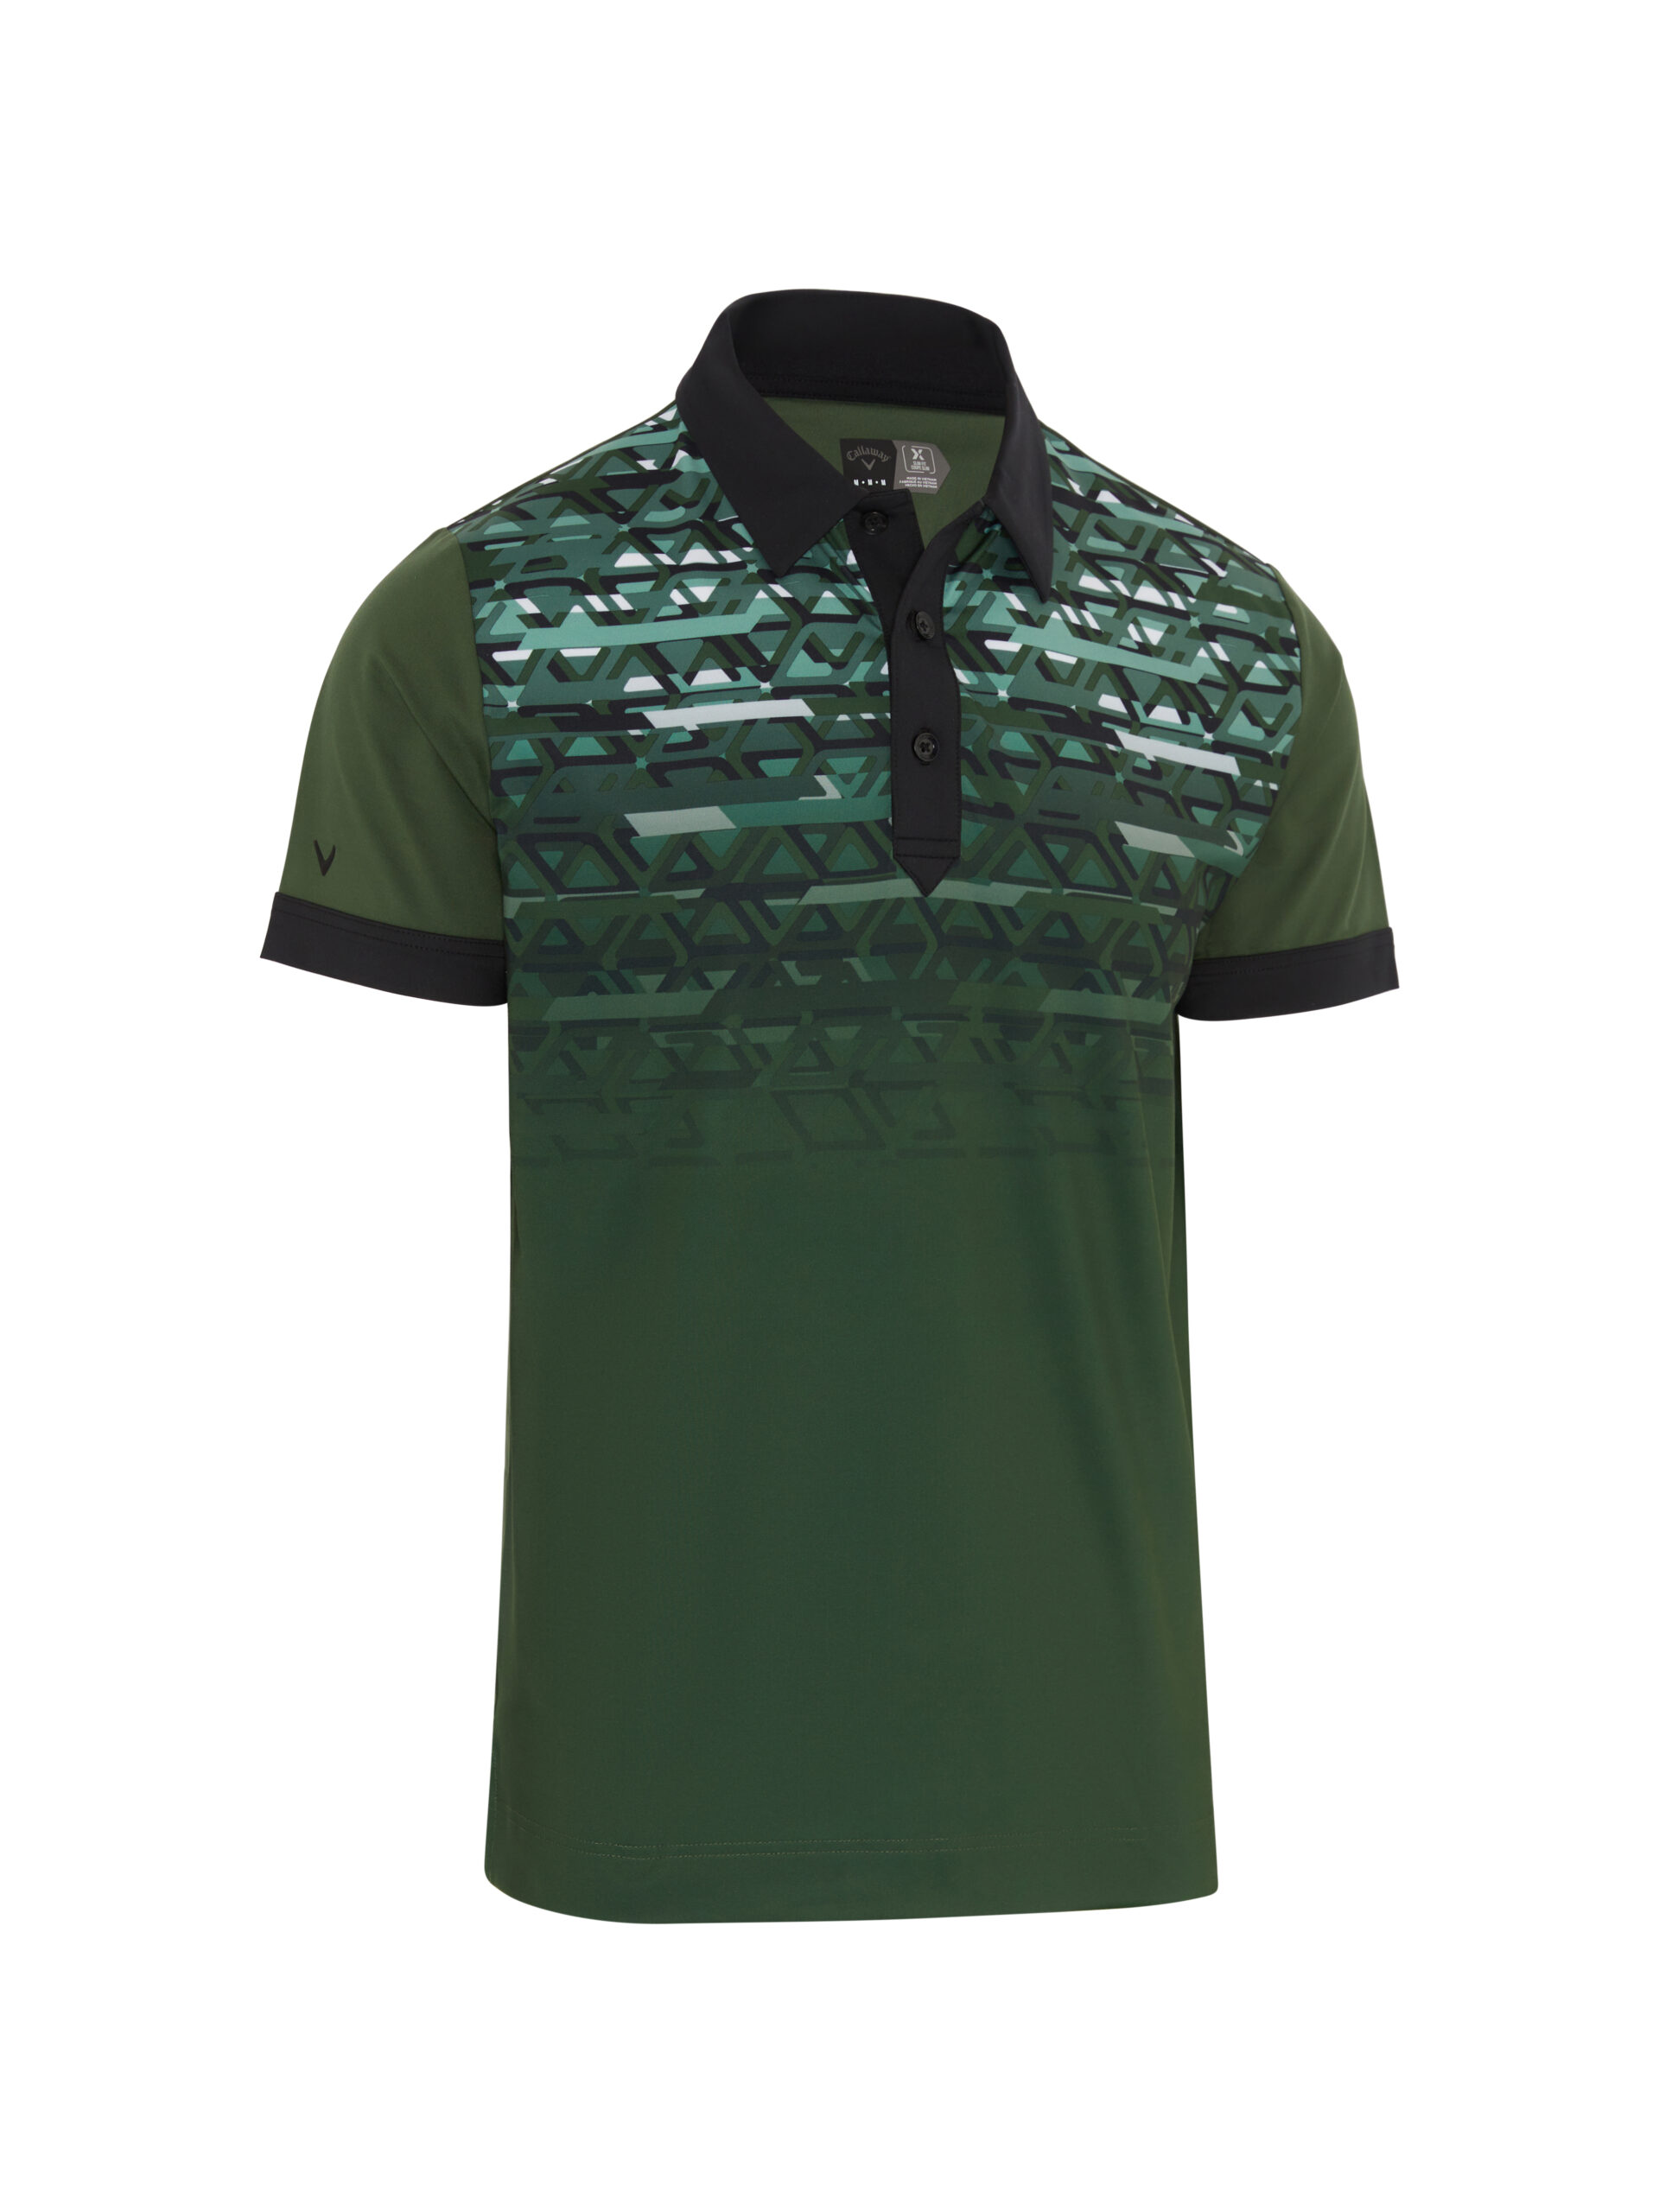 Callaway Ombre Motion Chev pánské golfové triko, tmavě zelené, vel. XL